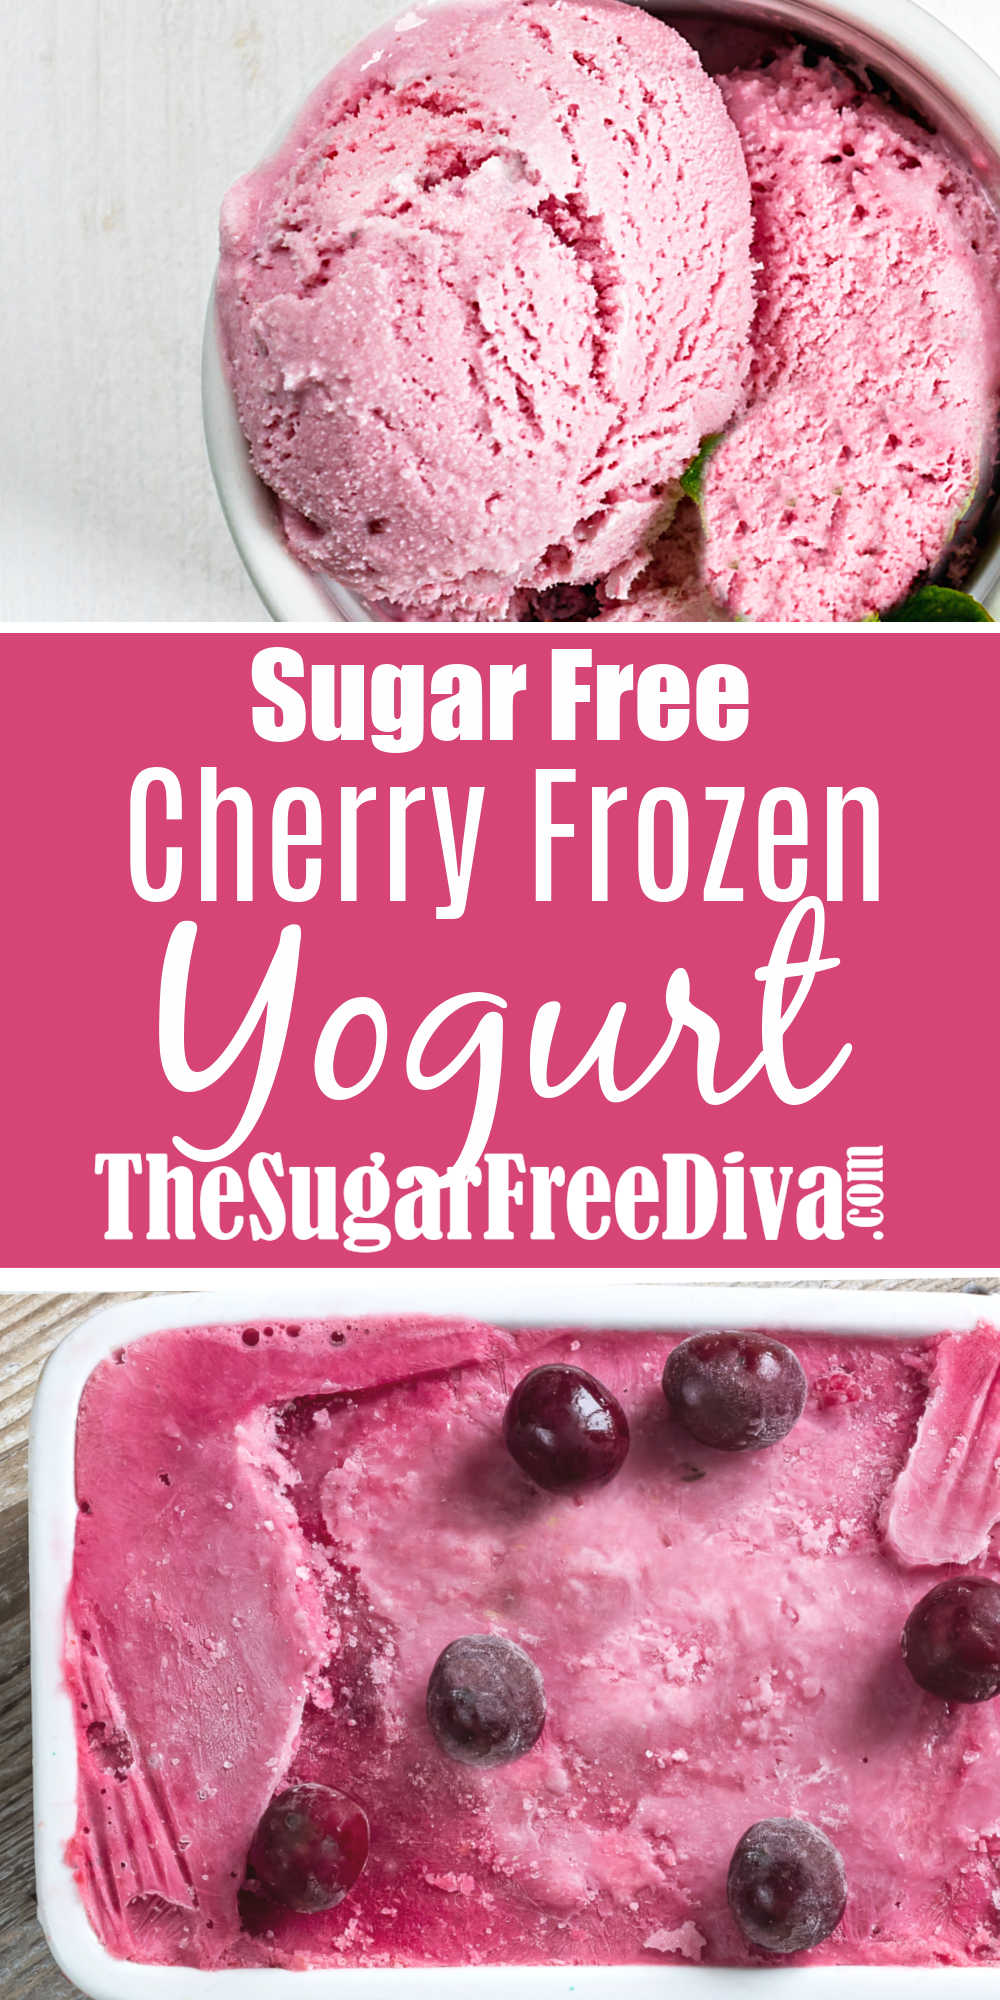 Sugar Free Cherry Frozen Yogurt